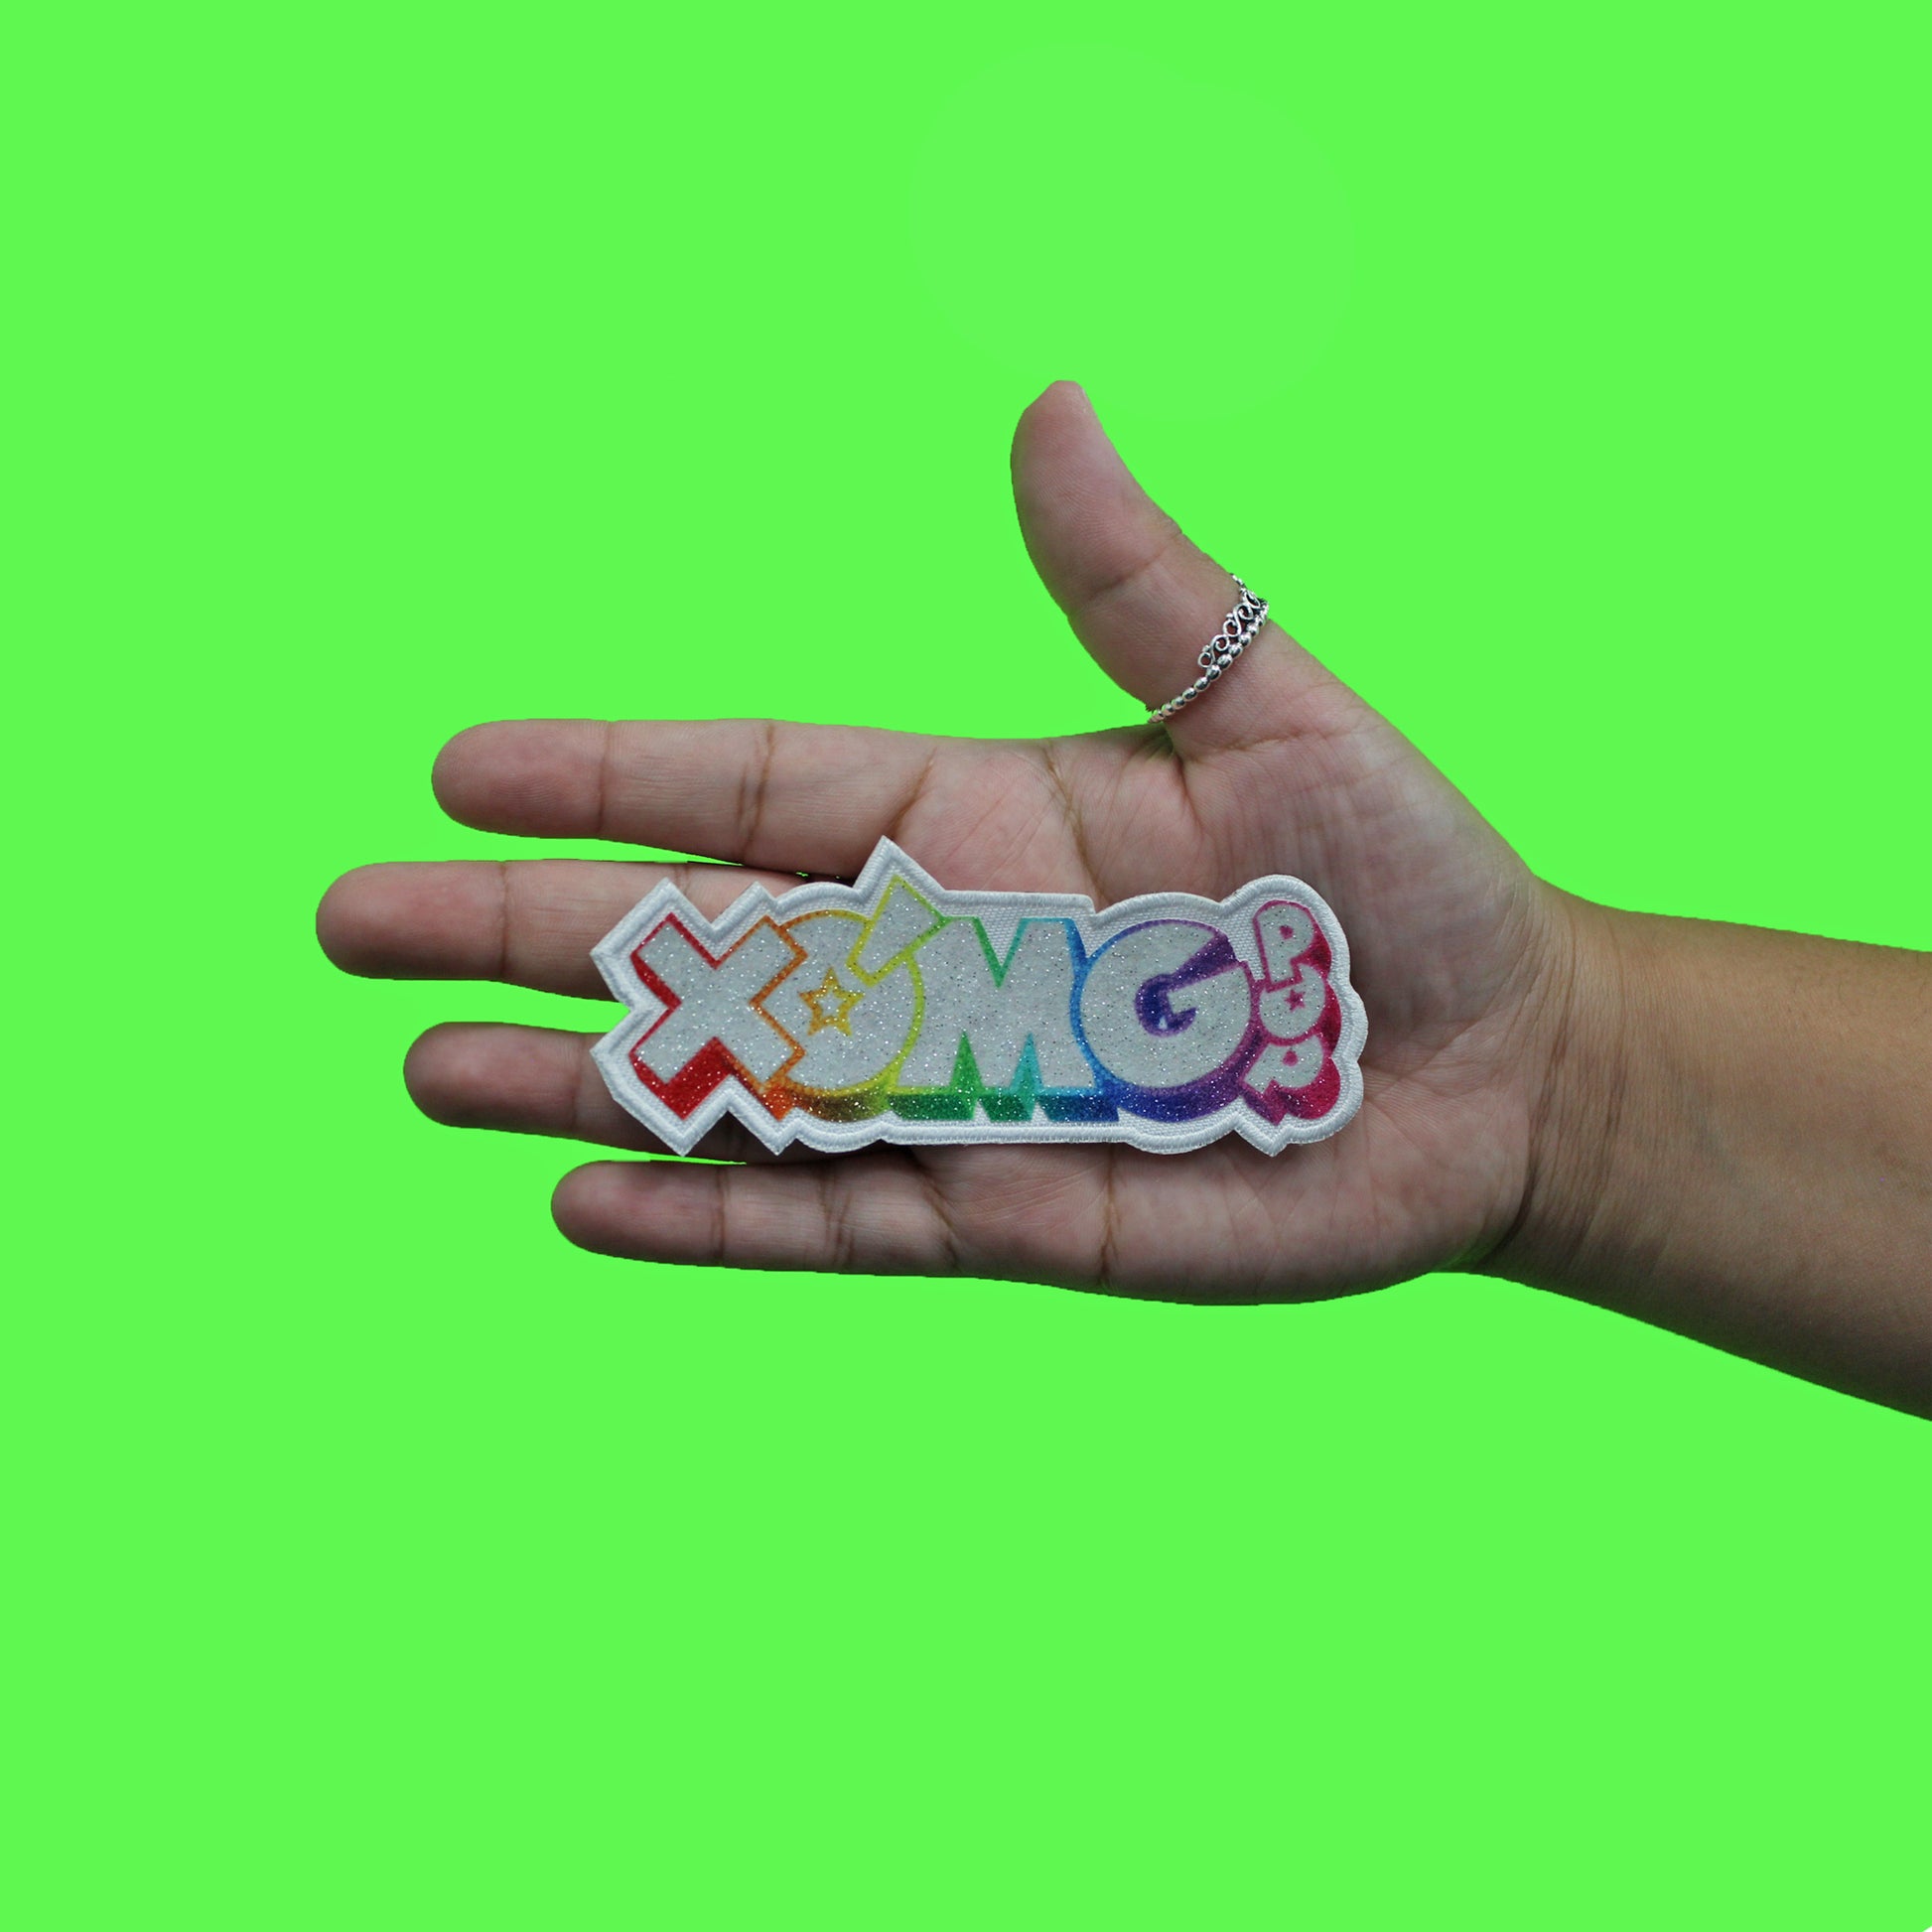 XOMG Pop Glitter Logo Patch Dance Girls Applique Iron On